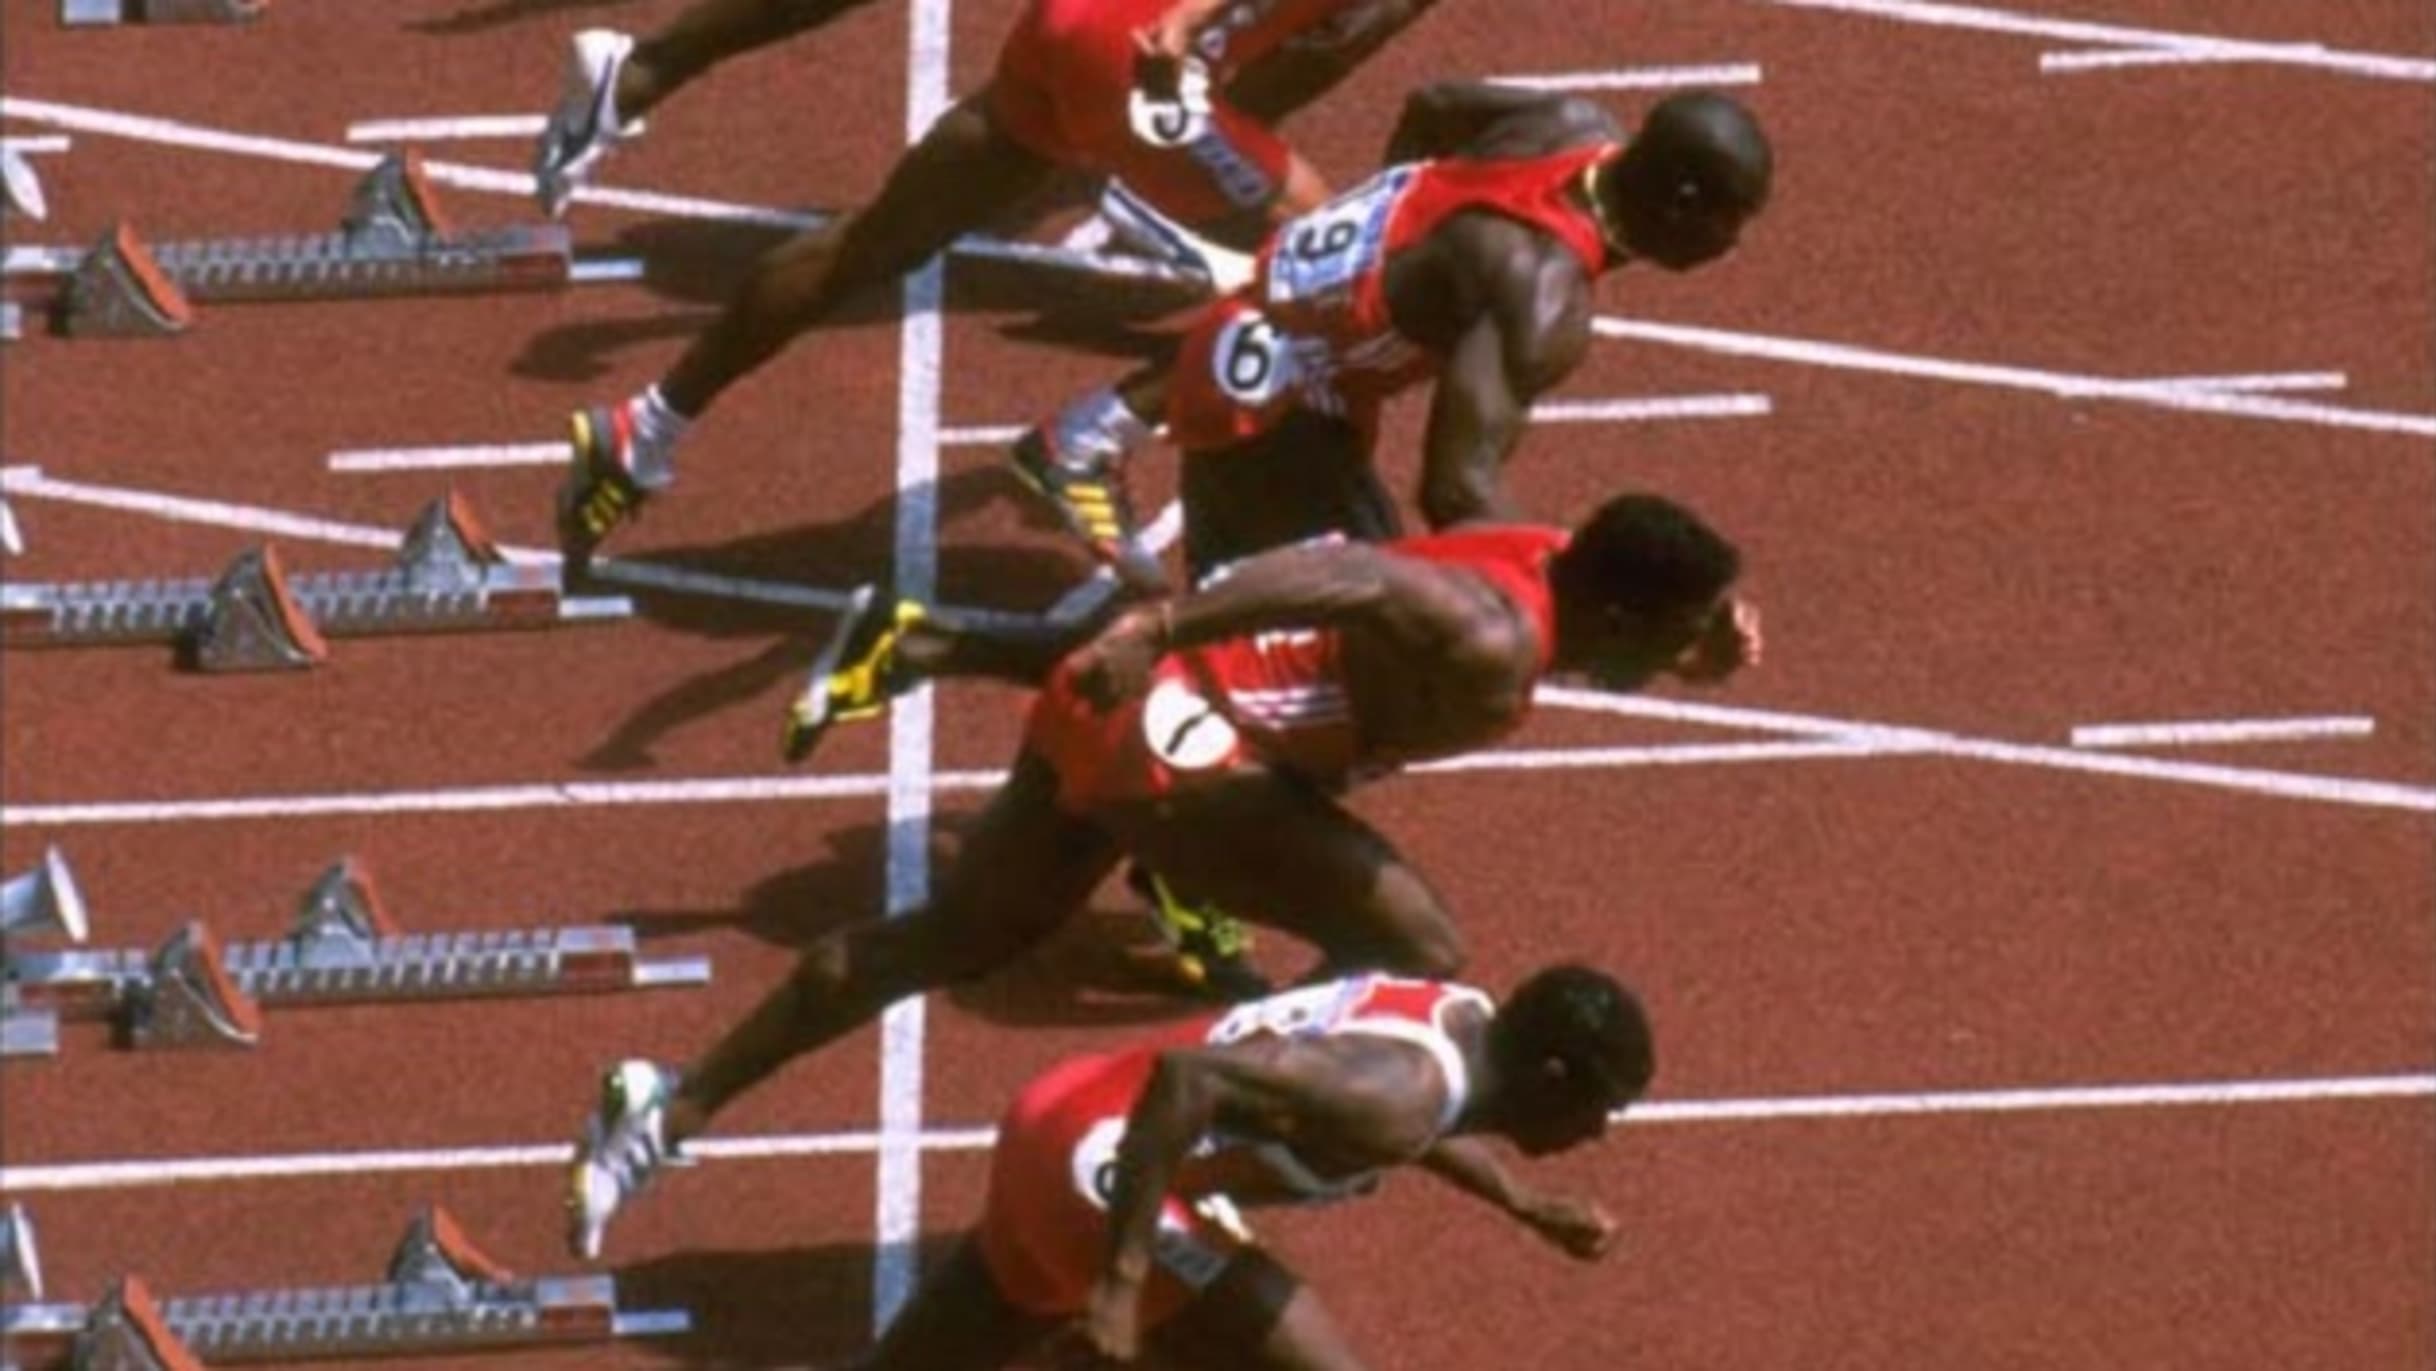 Johnson falls hero to zero in 100m disgrace News